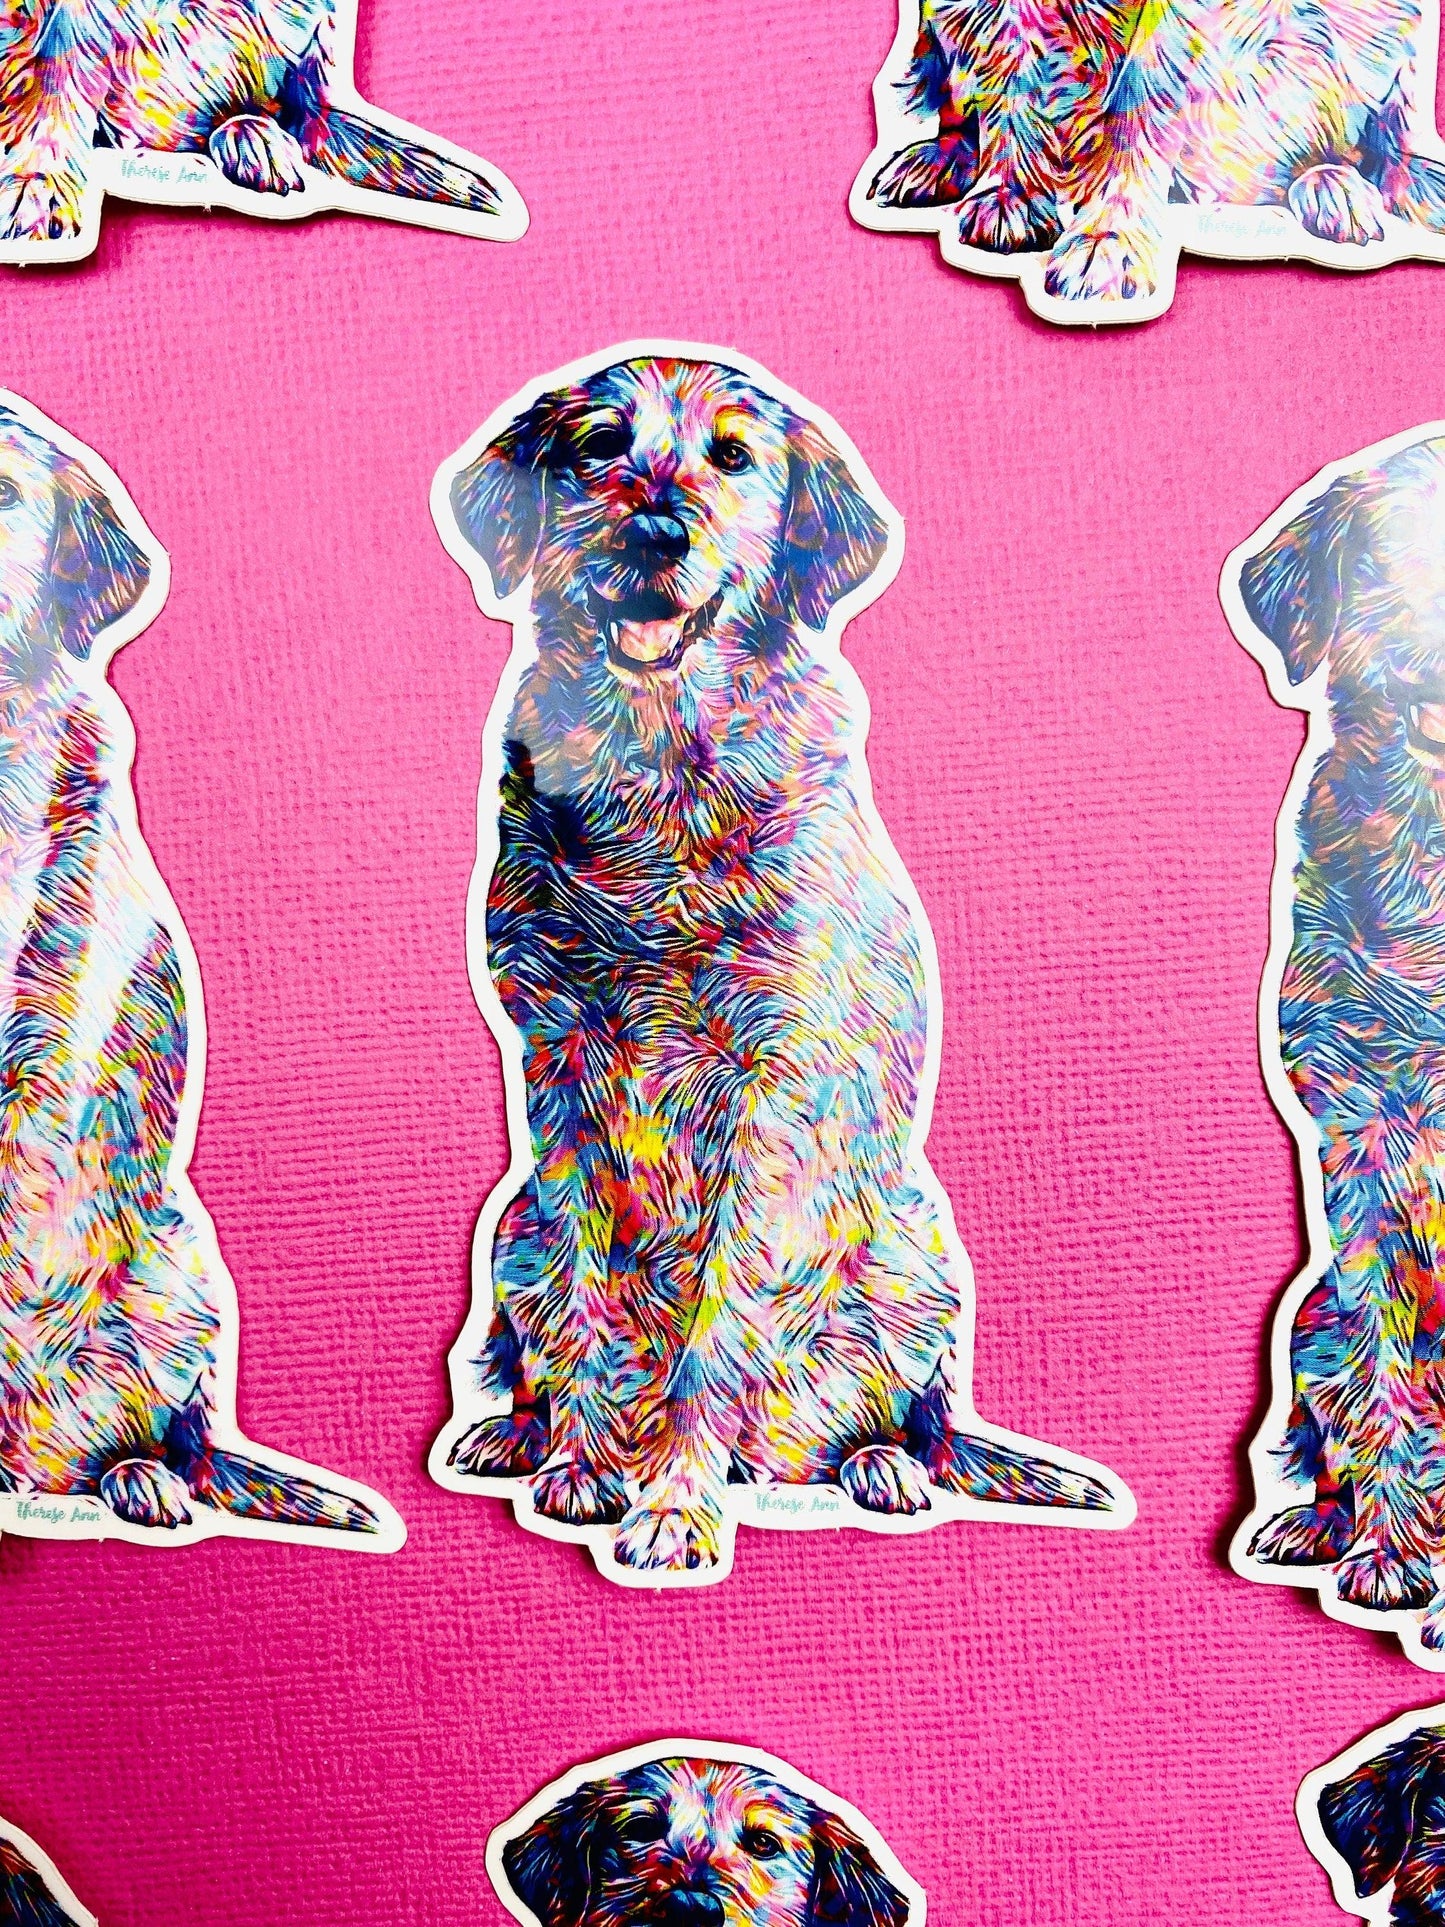 Labrador Retriever Sticker Colorful Abstract Cute Labrador Retriever Dog Decal for Car, Hydroflask, Gifts Under 5 for Labrador Owner Mom - Ottos Grotto :: Stickers For Your Stuff